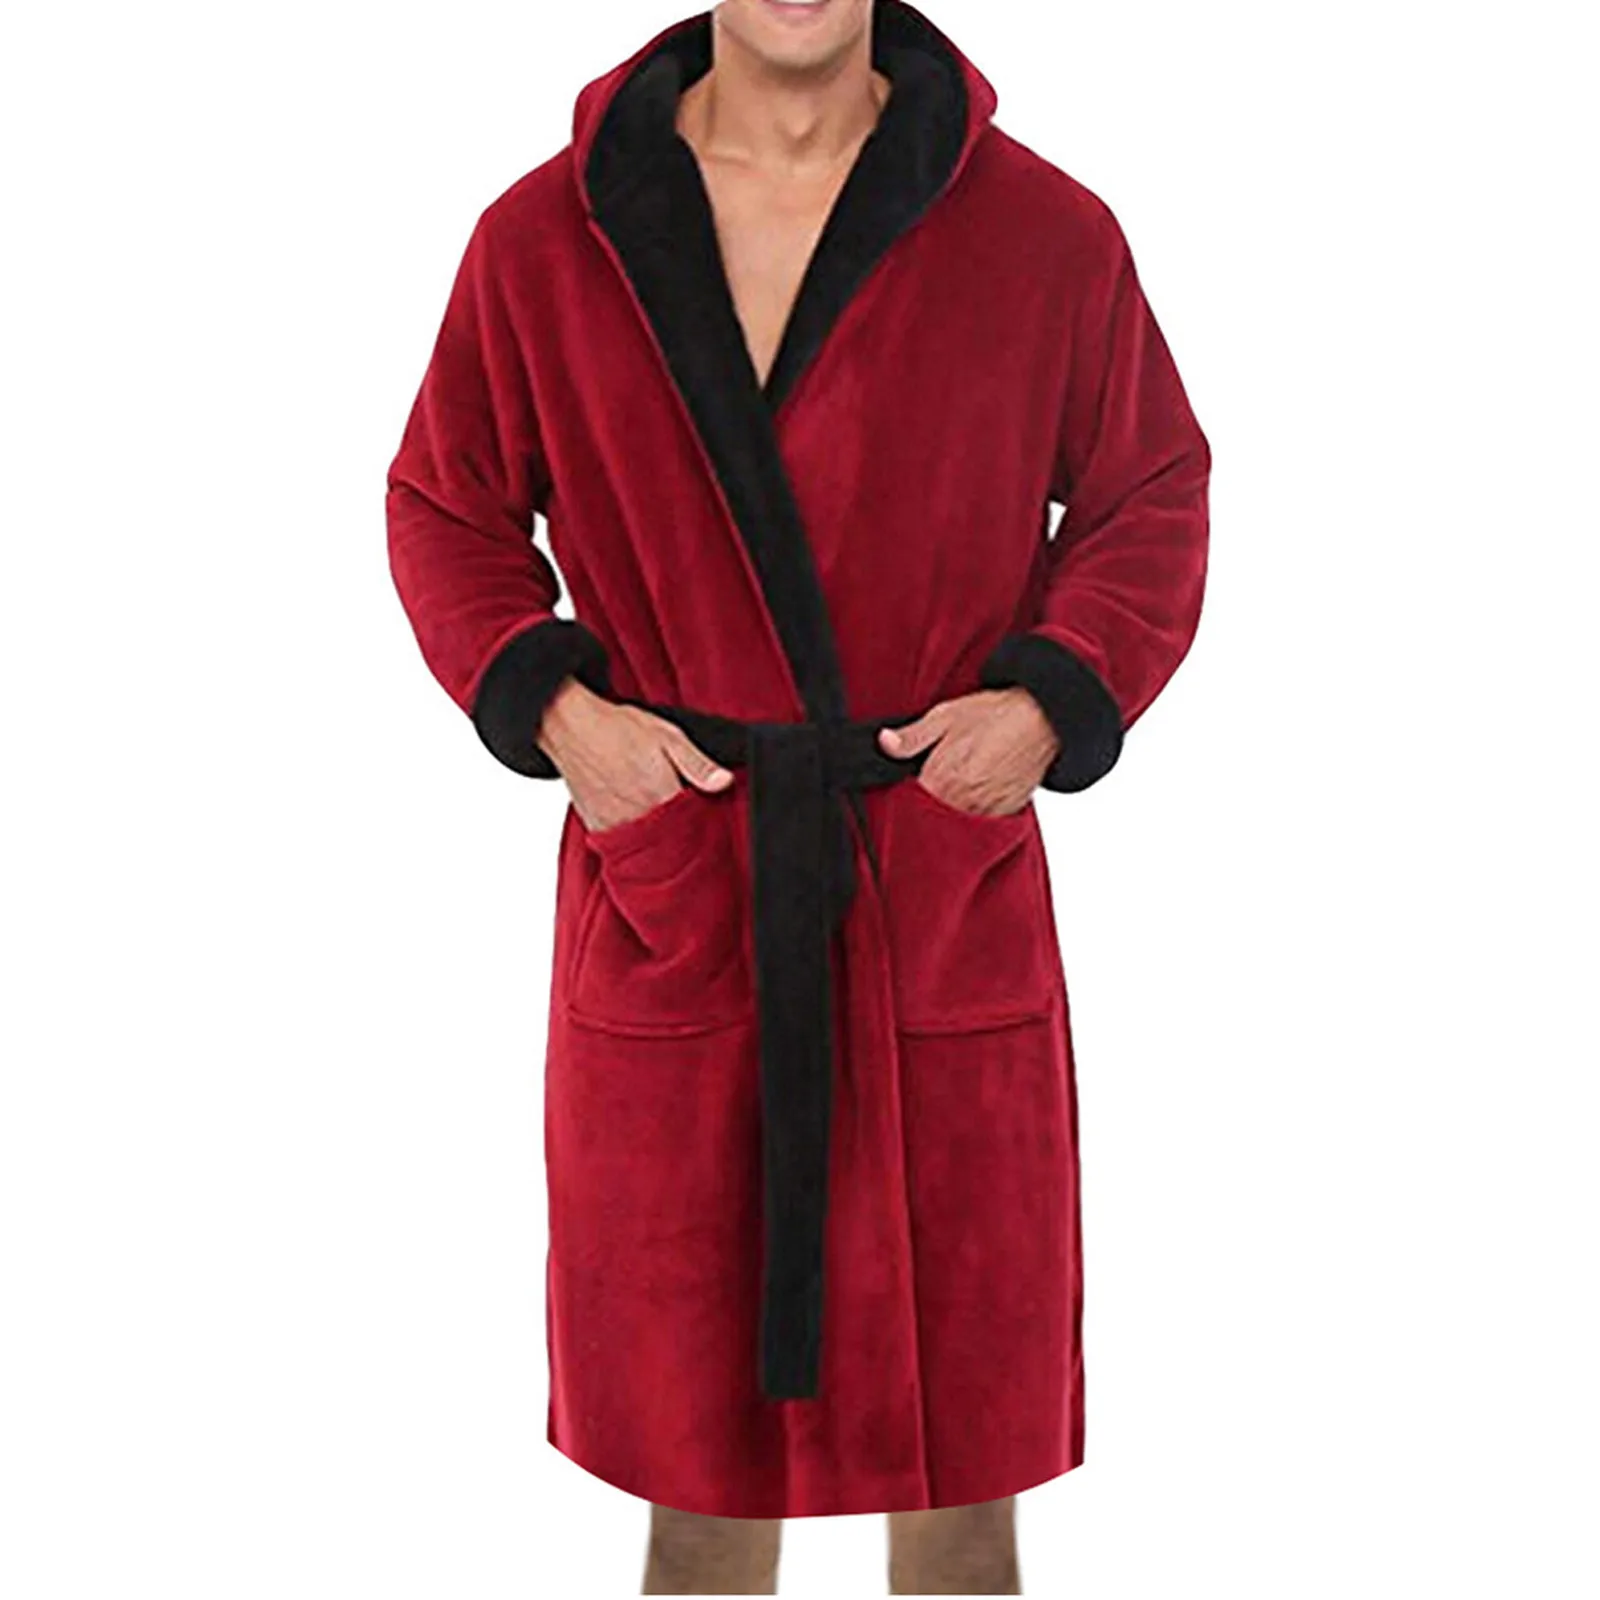 Hot Sale Men's Winter 2021 Warm Robes Sleepwear Thick Lengthened Plush Shawl Bathrobe Kimono Home Clothes Long Sleeved Nightgown